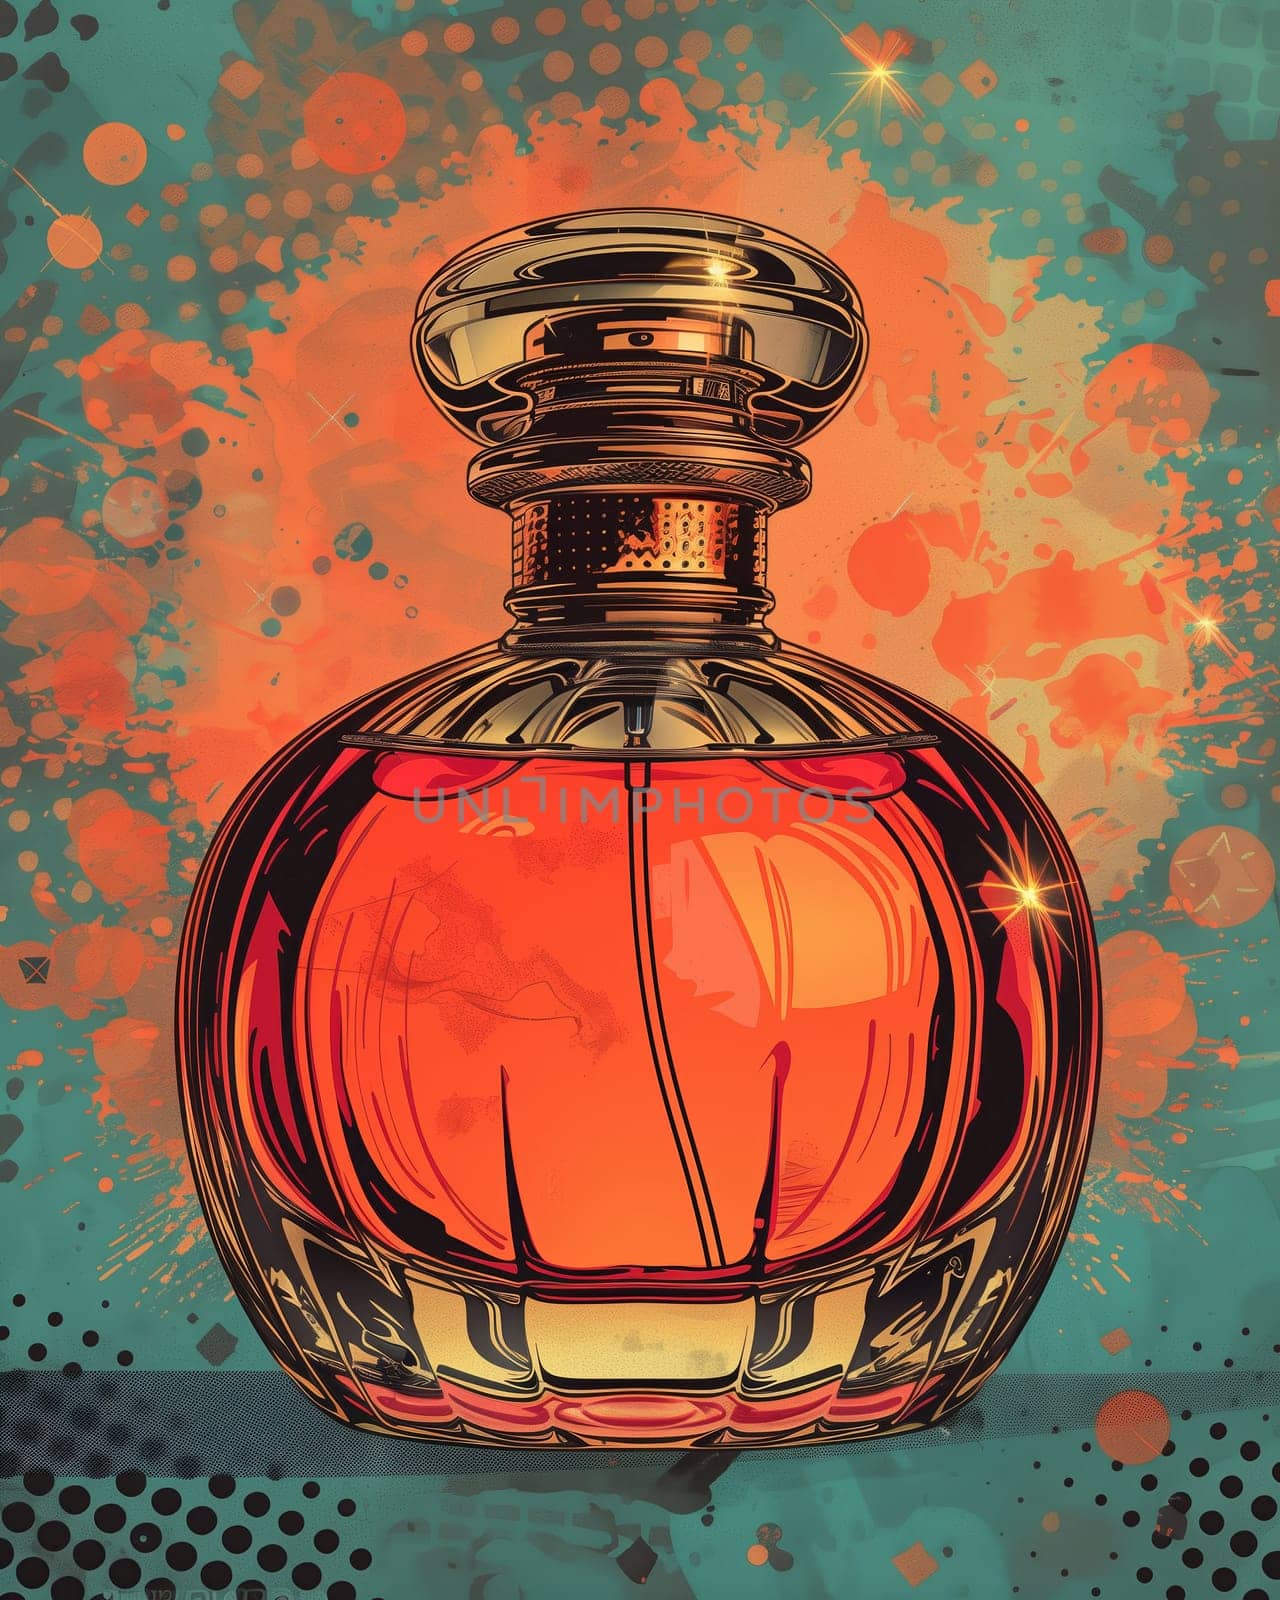 Illustration elegant perfume bottle in vintage pop art style. Selective focus.